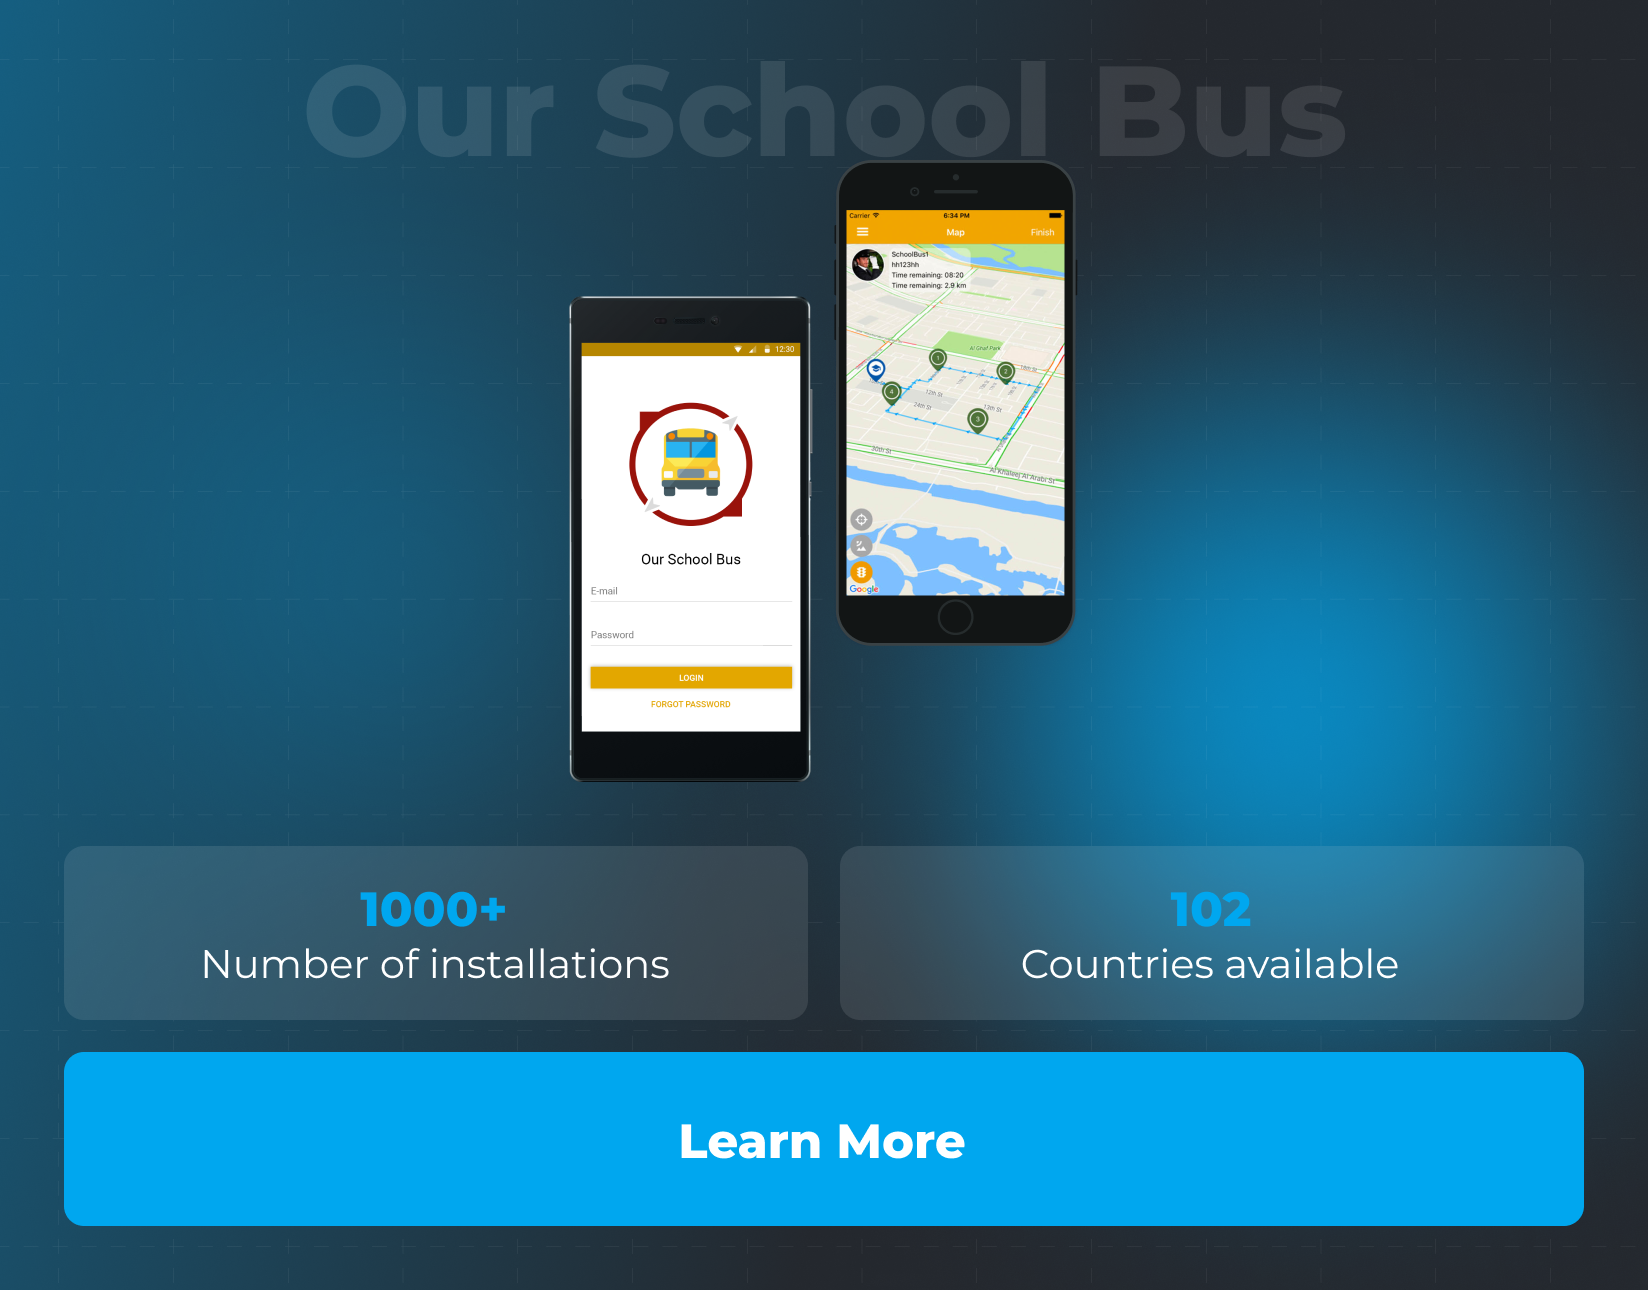 https://itechcraft.com/portfolio/school-bus-tracking-application/